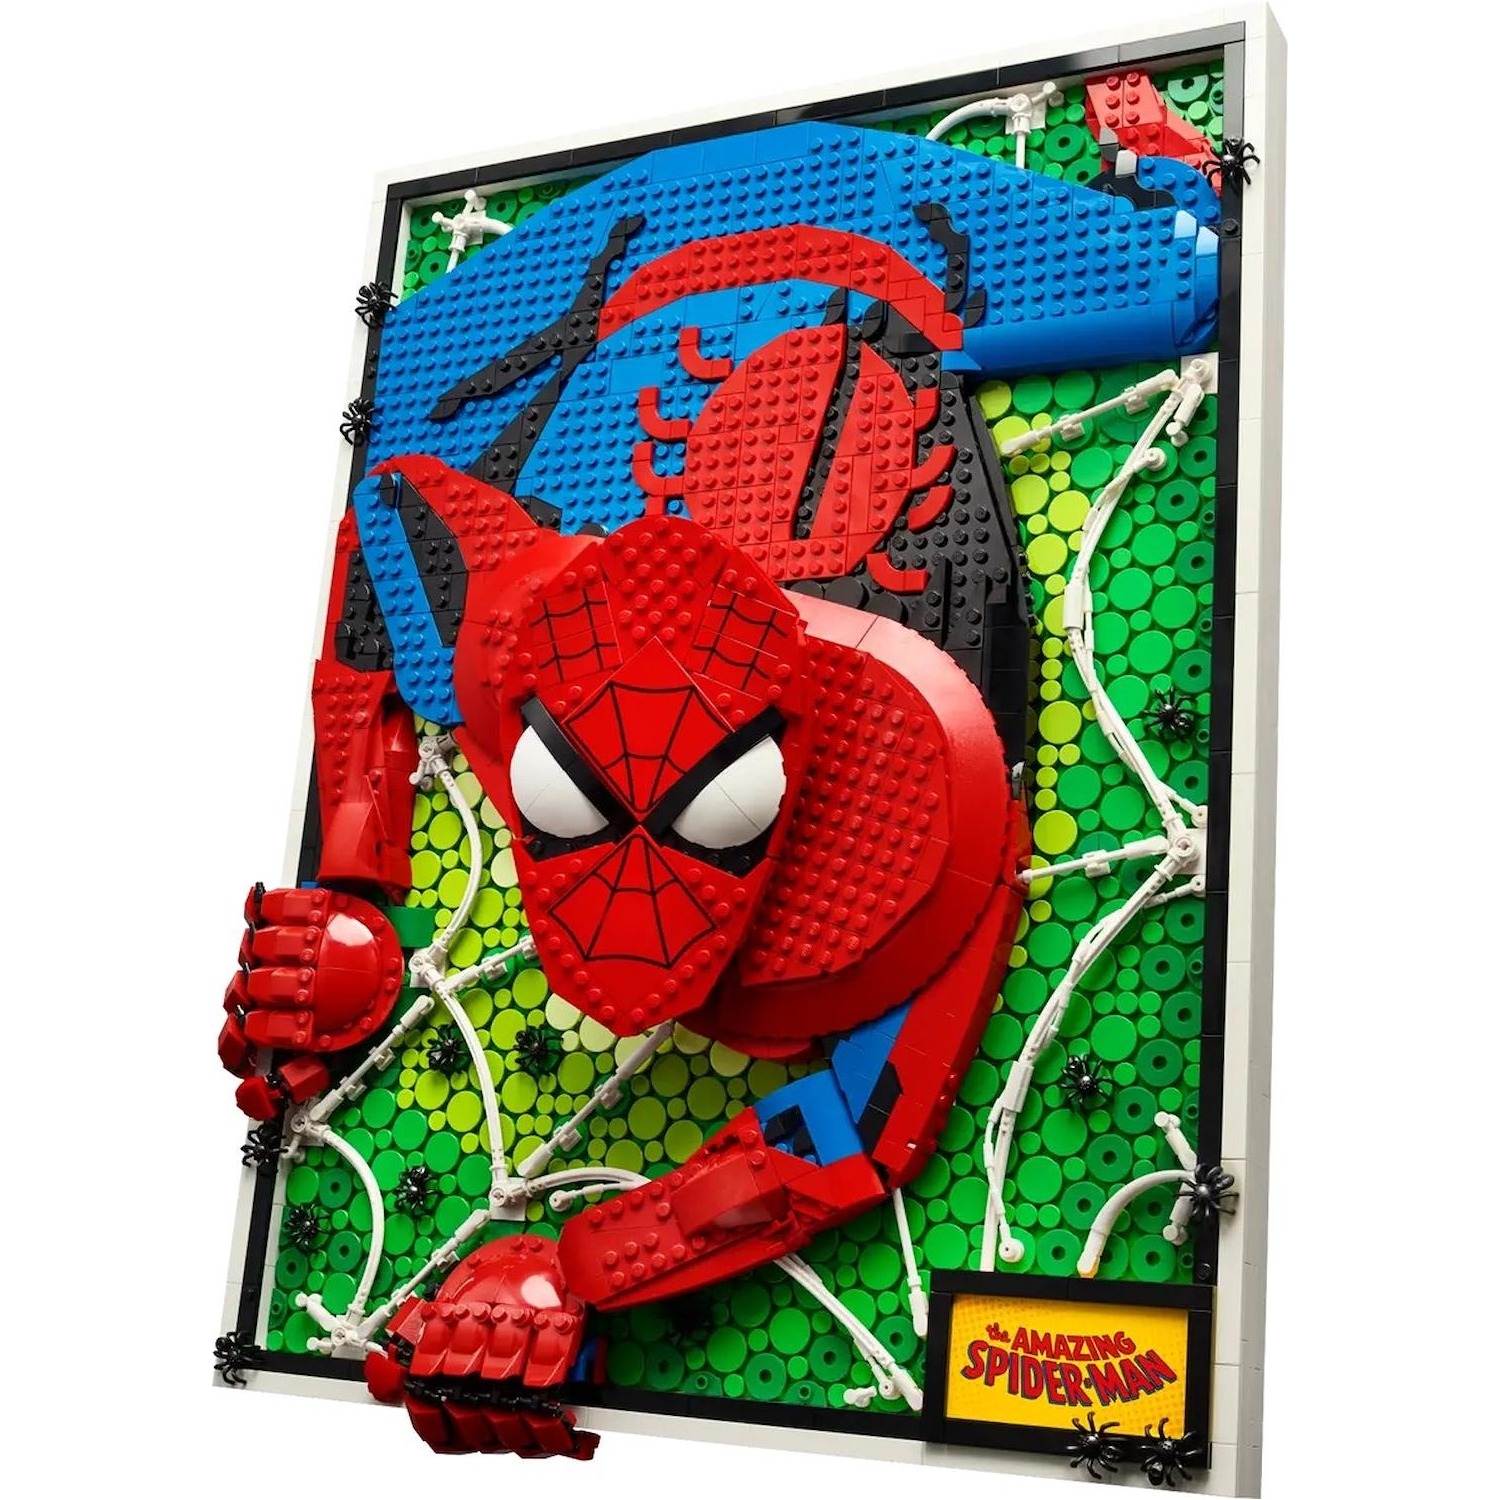 Gioco PS5 Marvel's Spider-Man 2 - DIMOStore